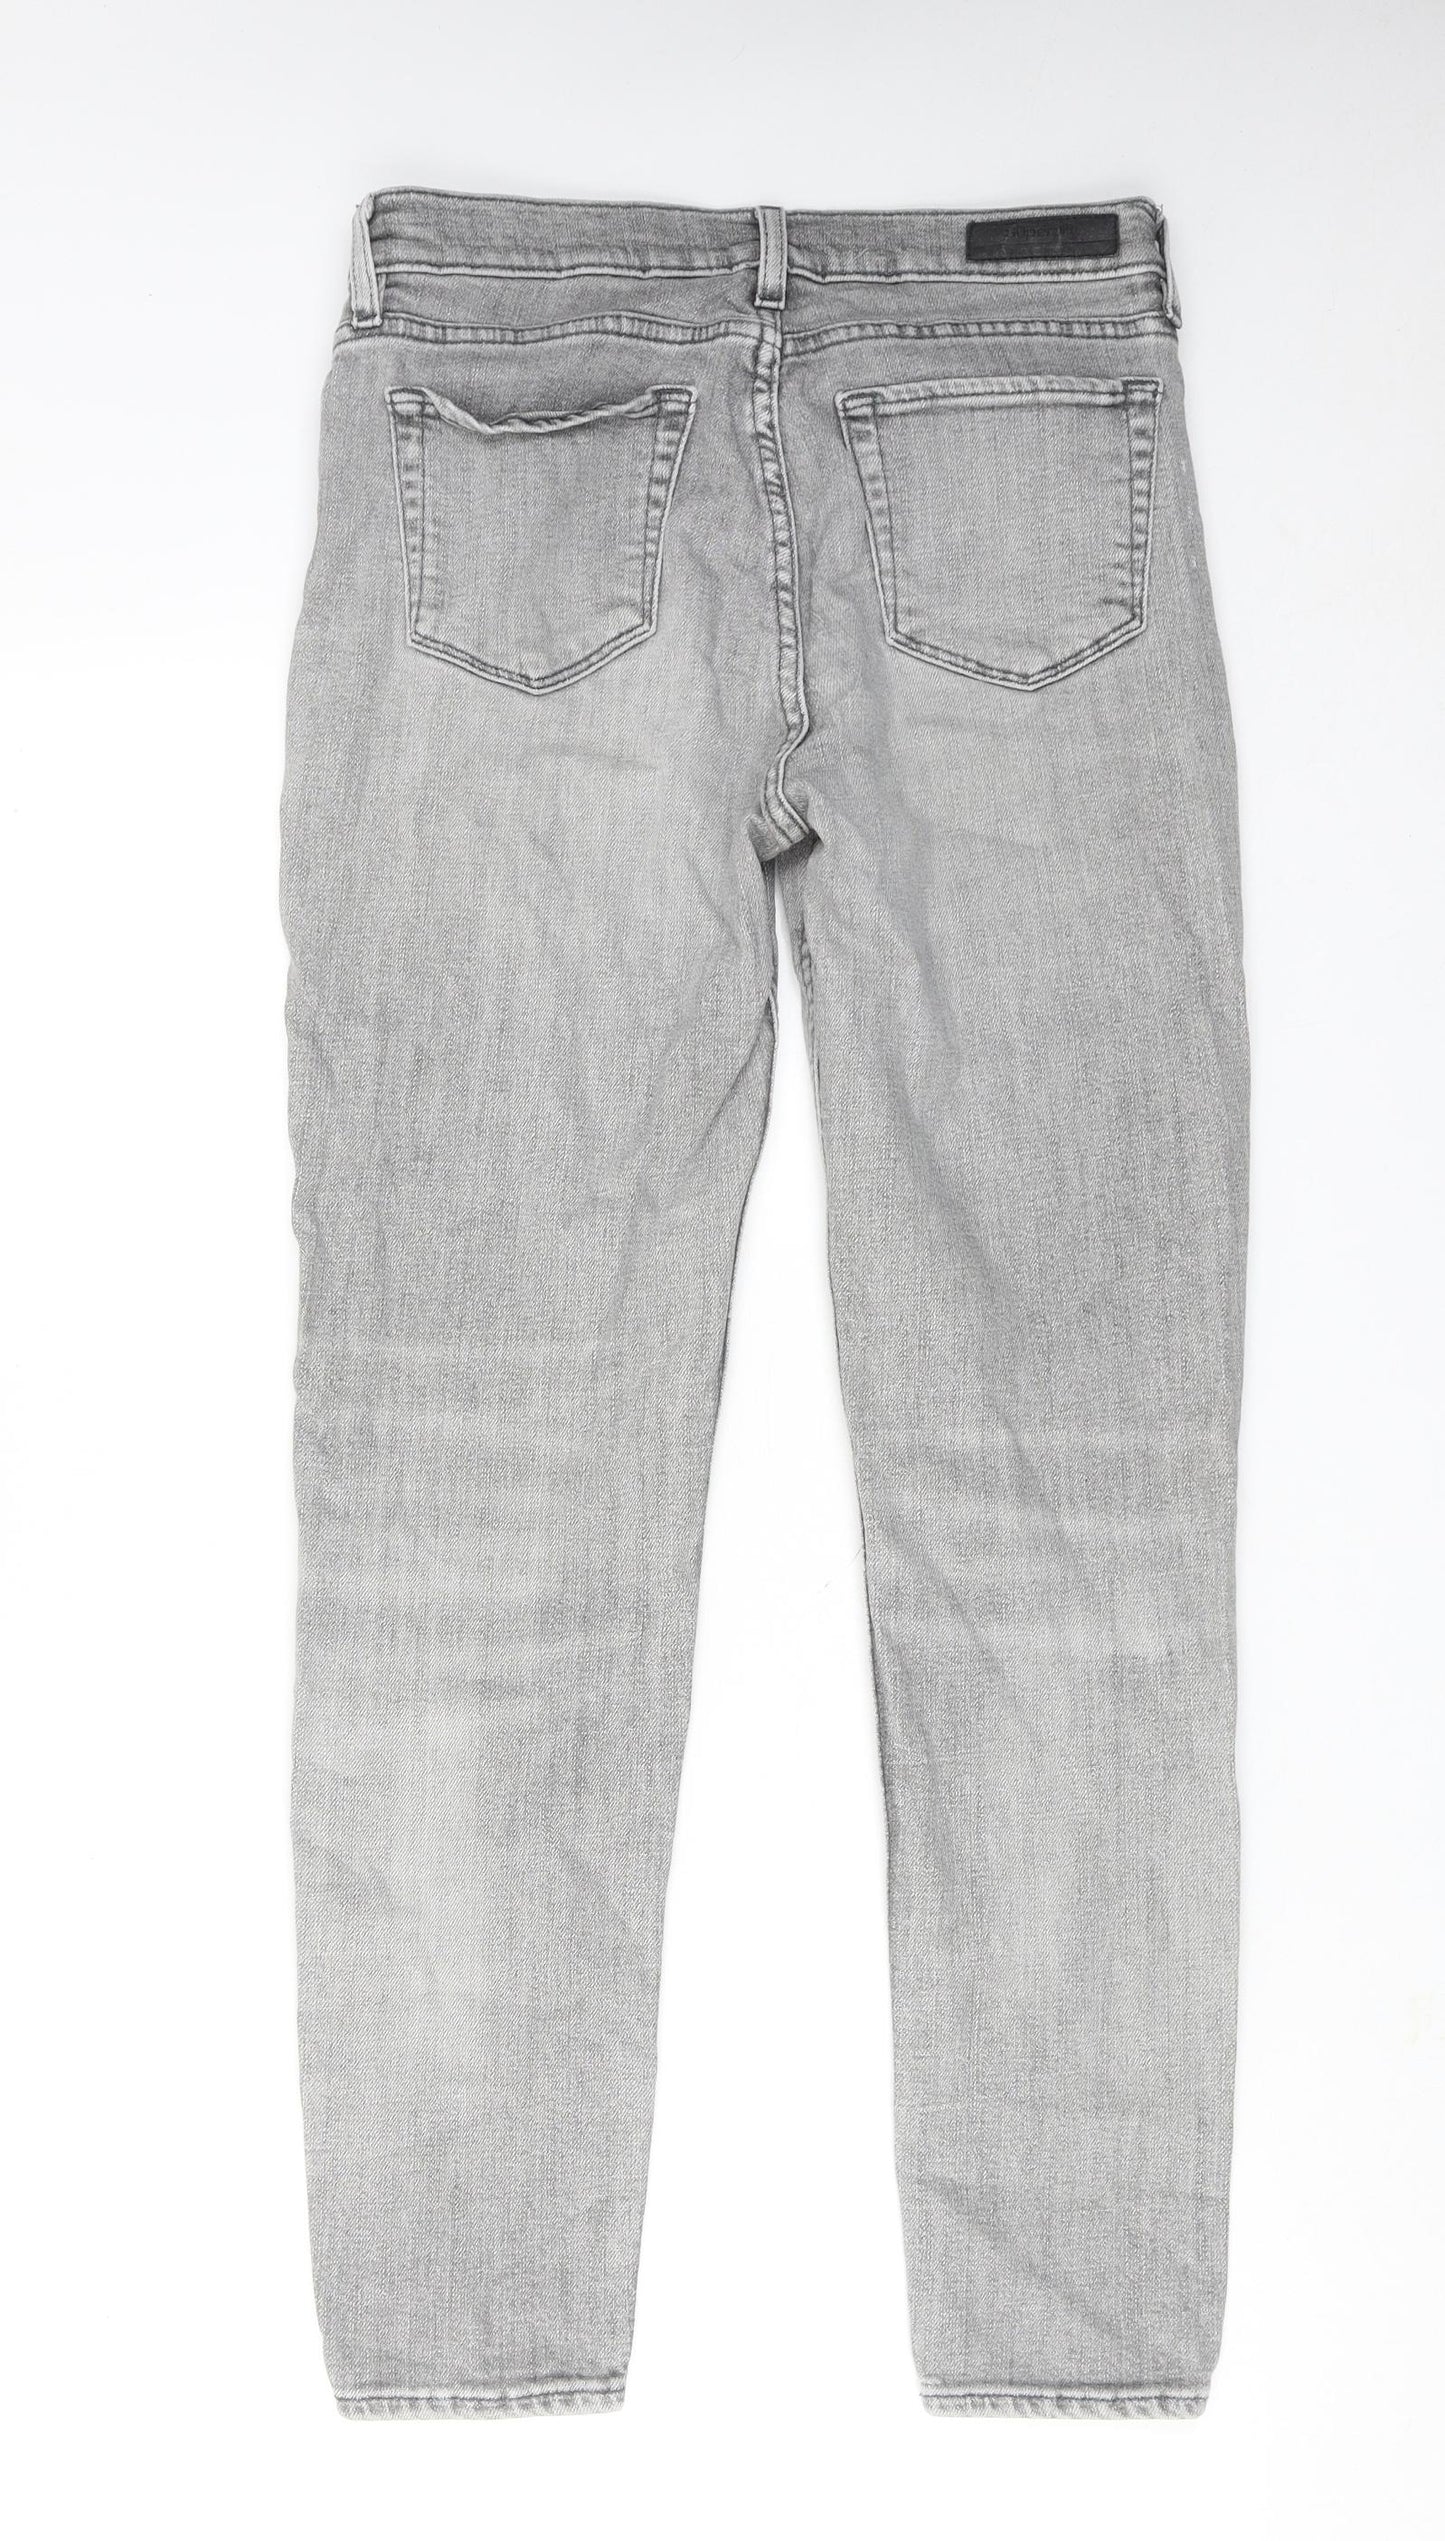 Superdry Mens Grey Cotton Skinny Jeans Size 30 in Regular Zip